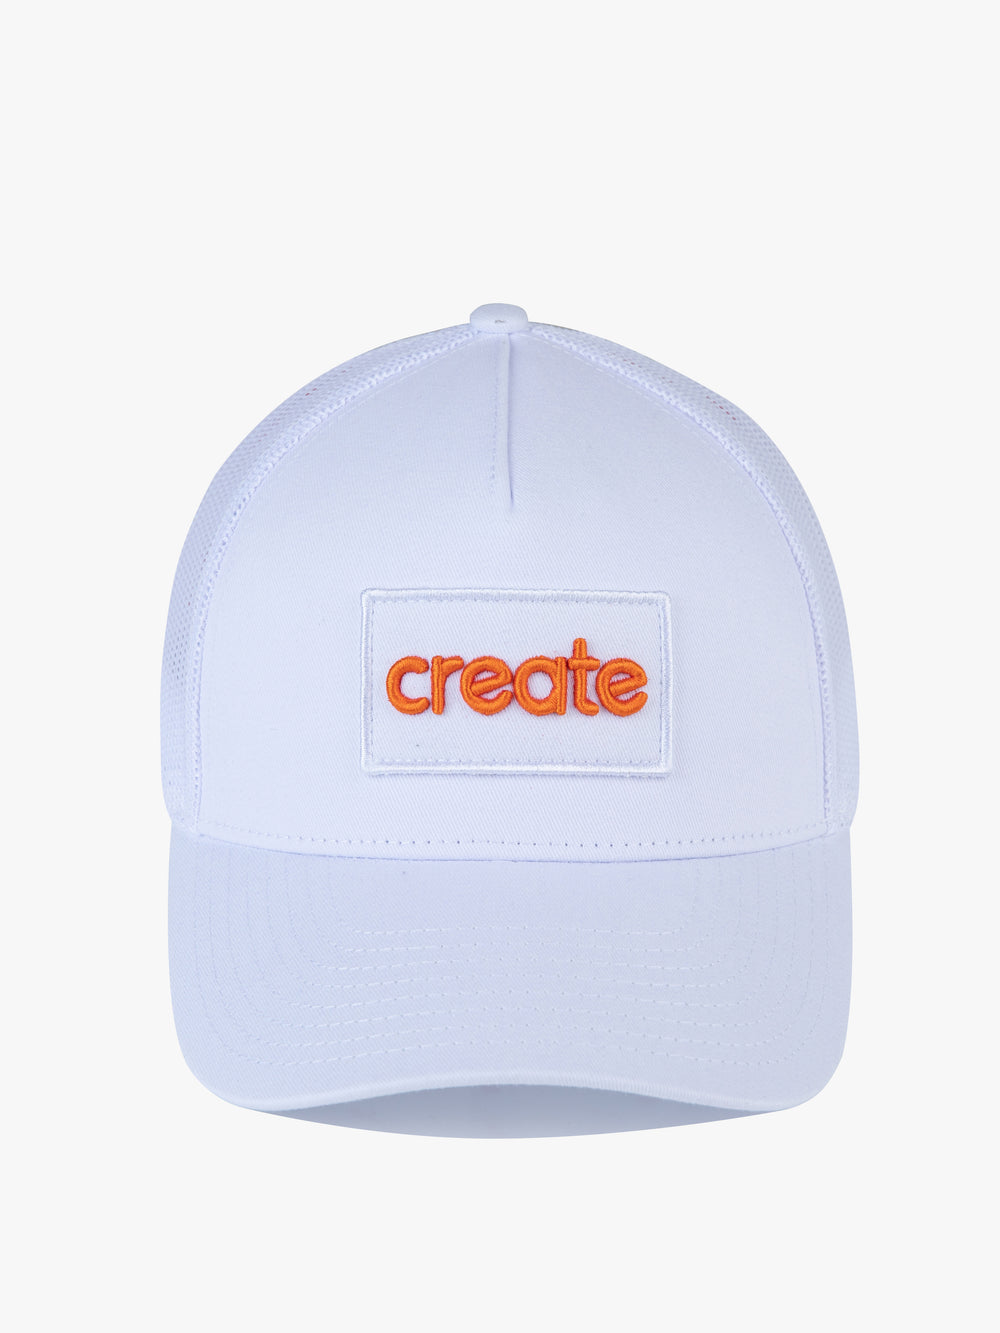 Create Trucker Hat